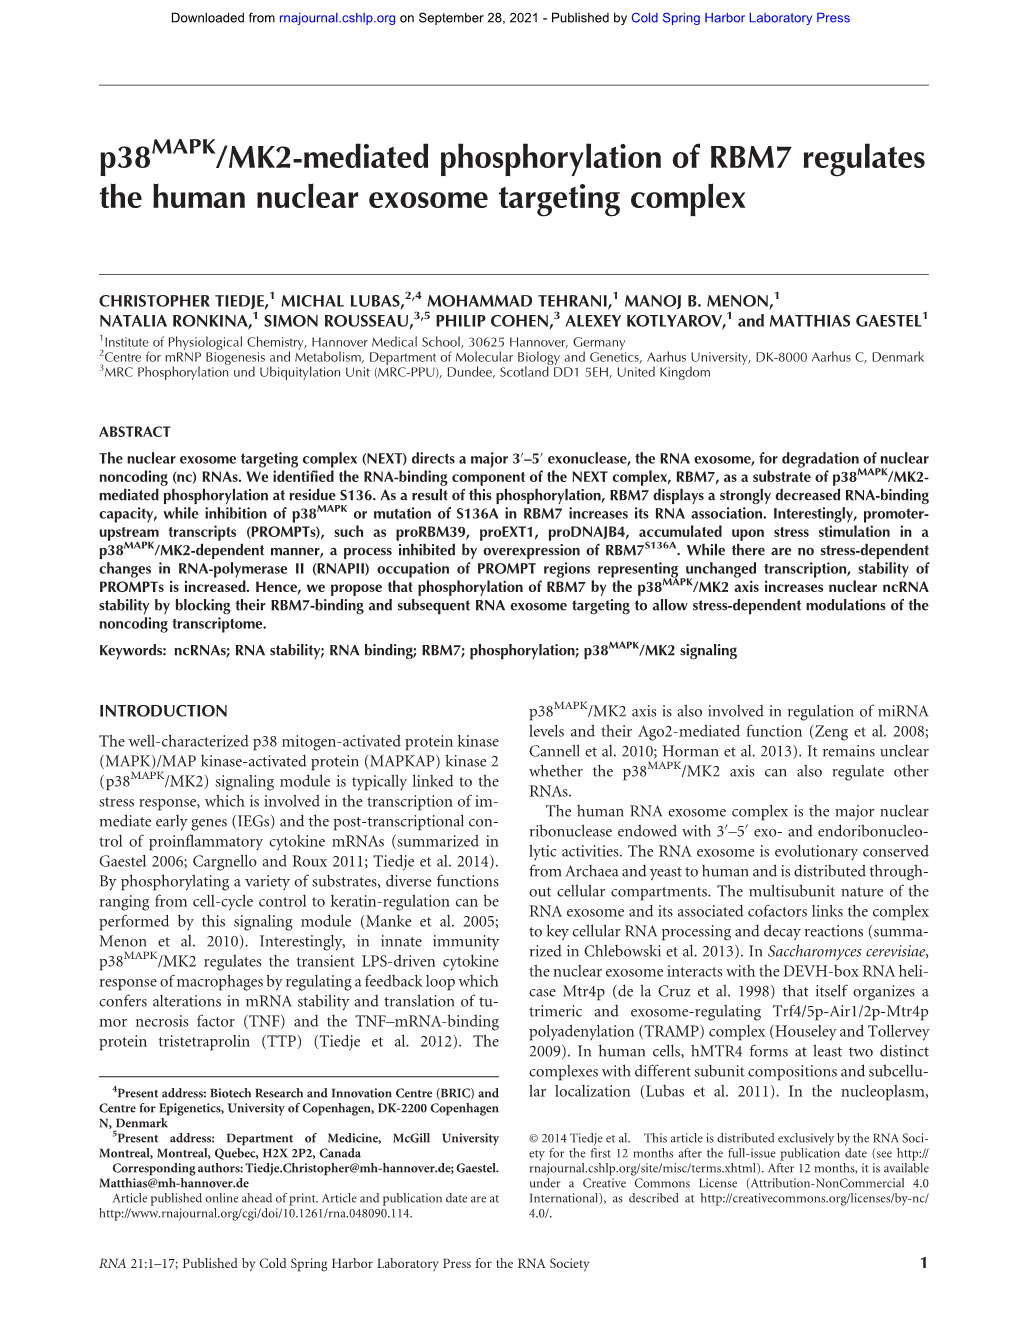 P38 /MK2-Mediated Phosphorylation of RBM7 Regulates the Human Nuclear Exosome Targeting Complex